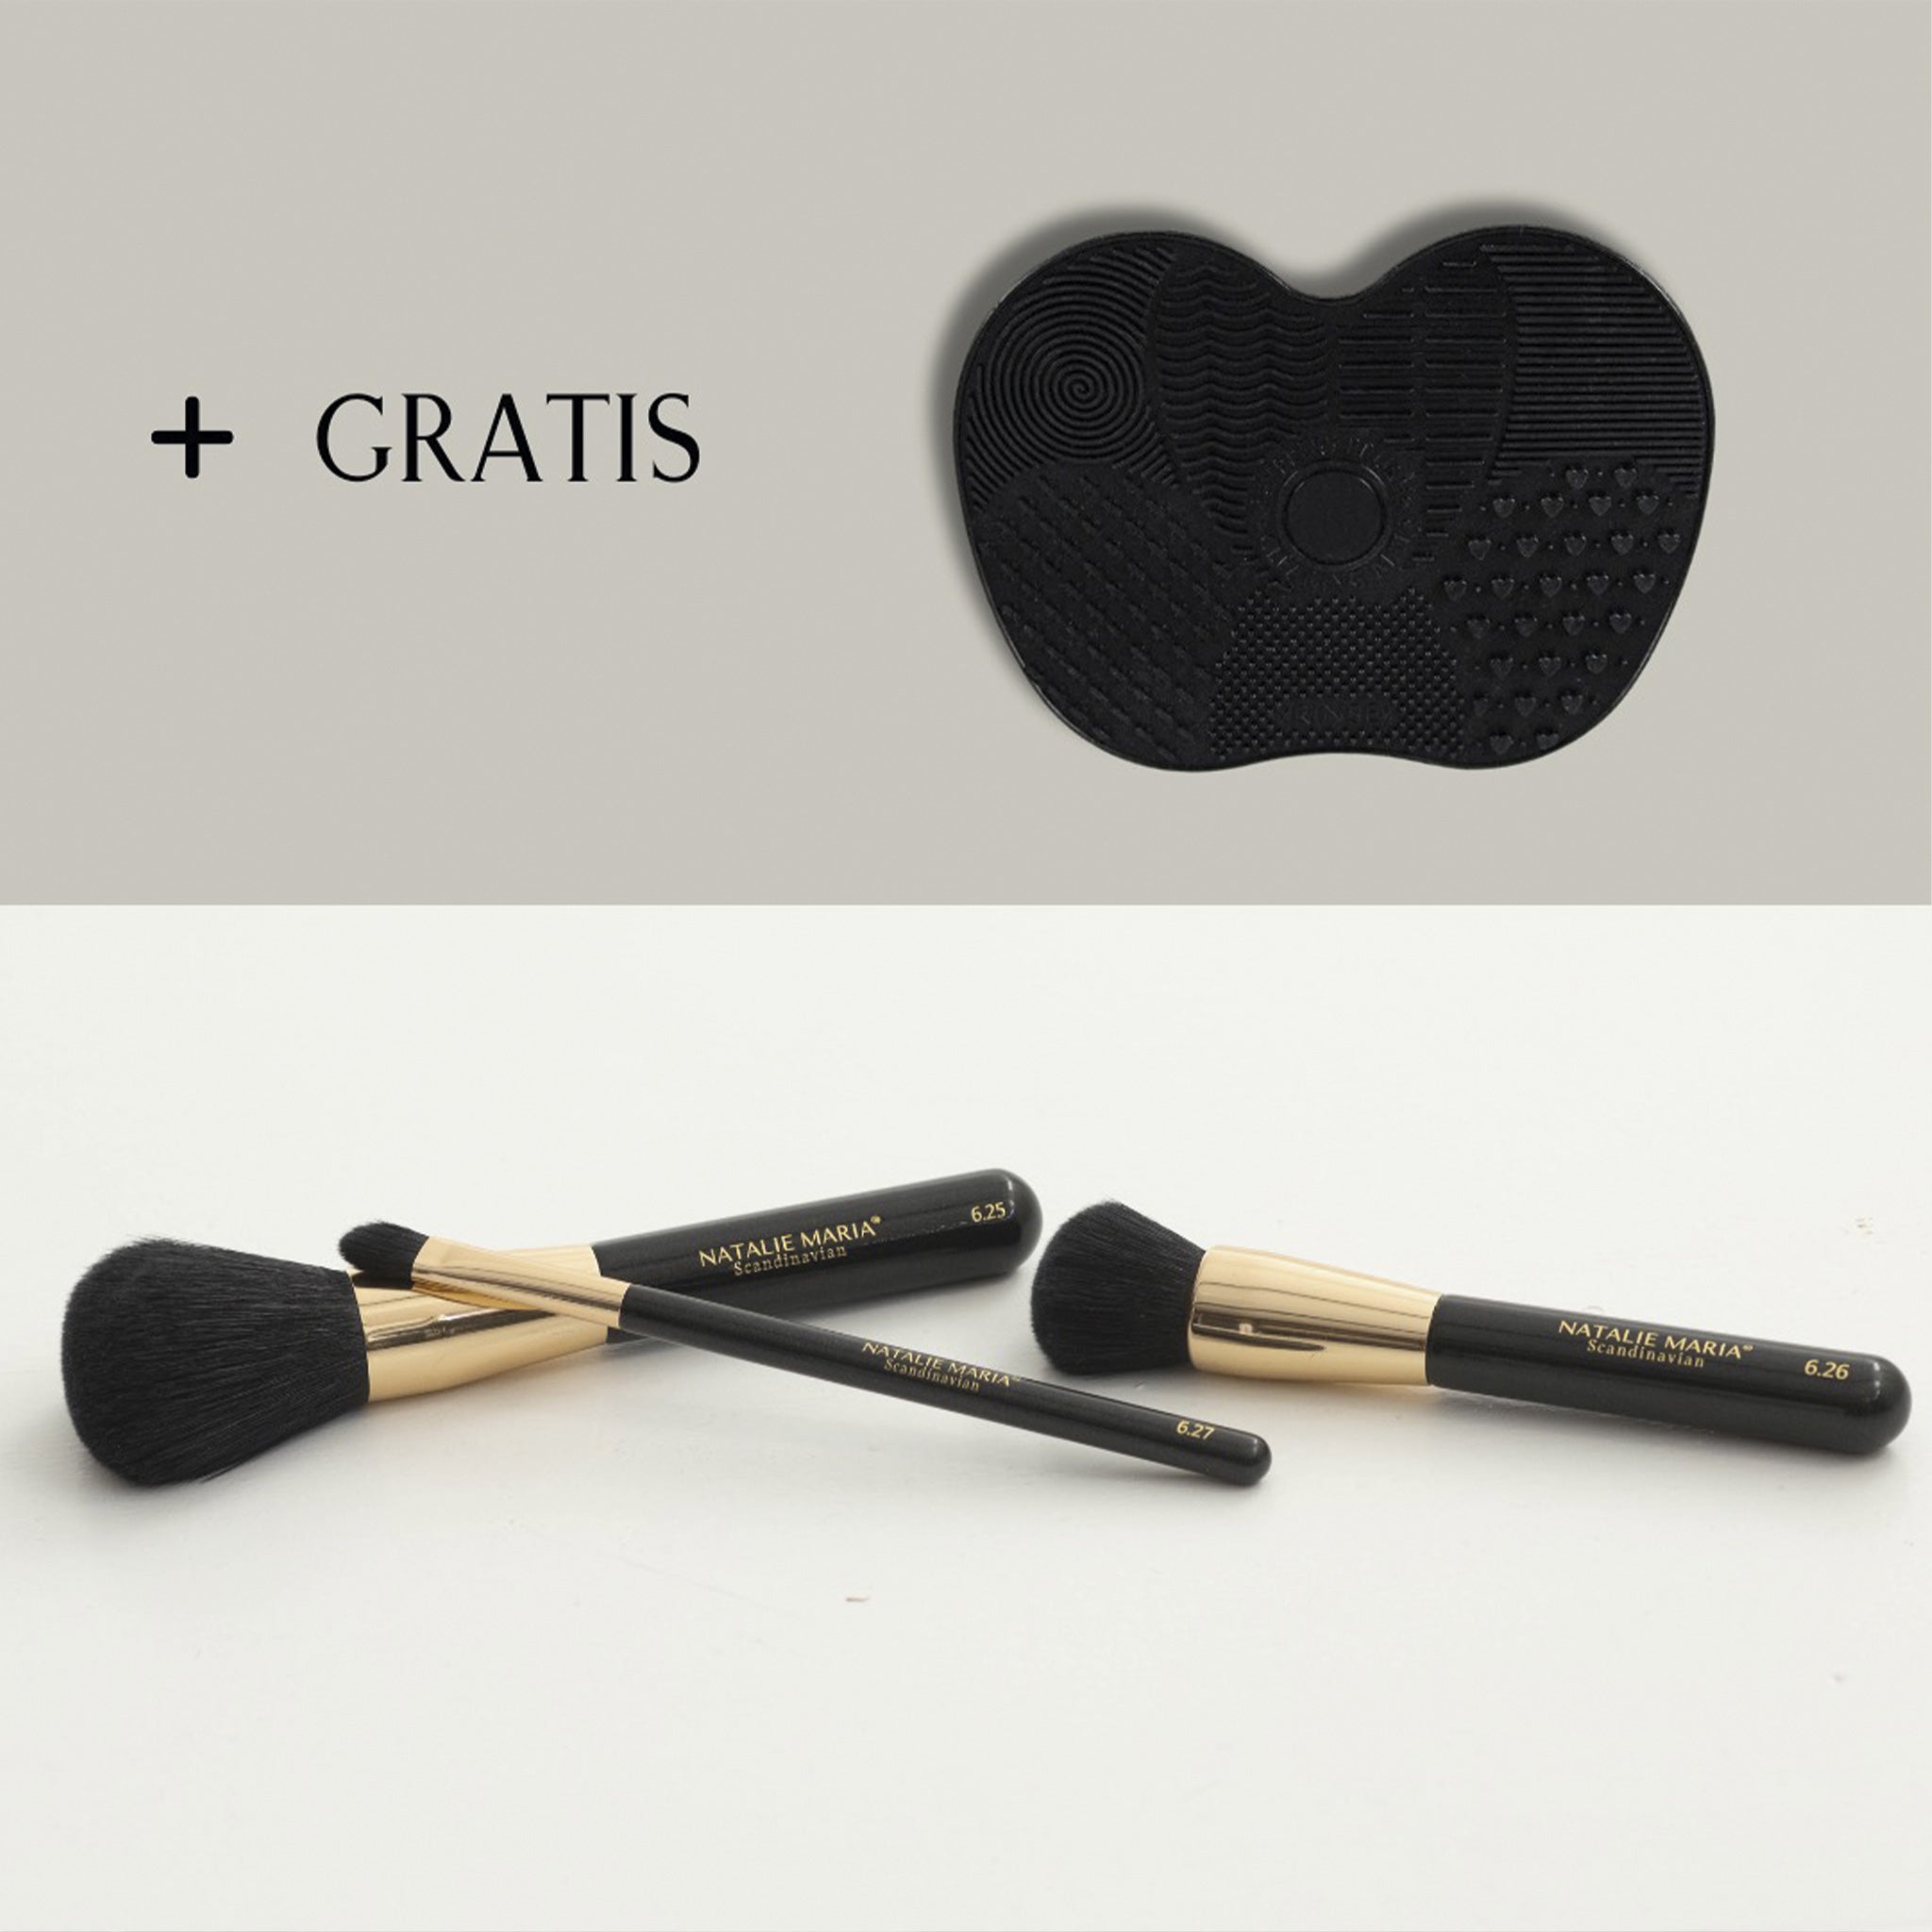 Natalie Maria Scandinavian - 3 new brushes + cleaning mat